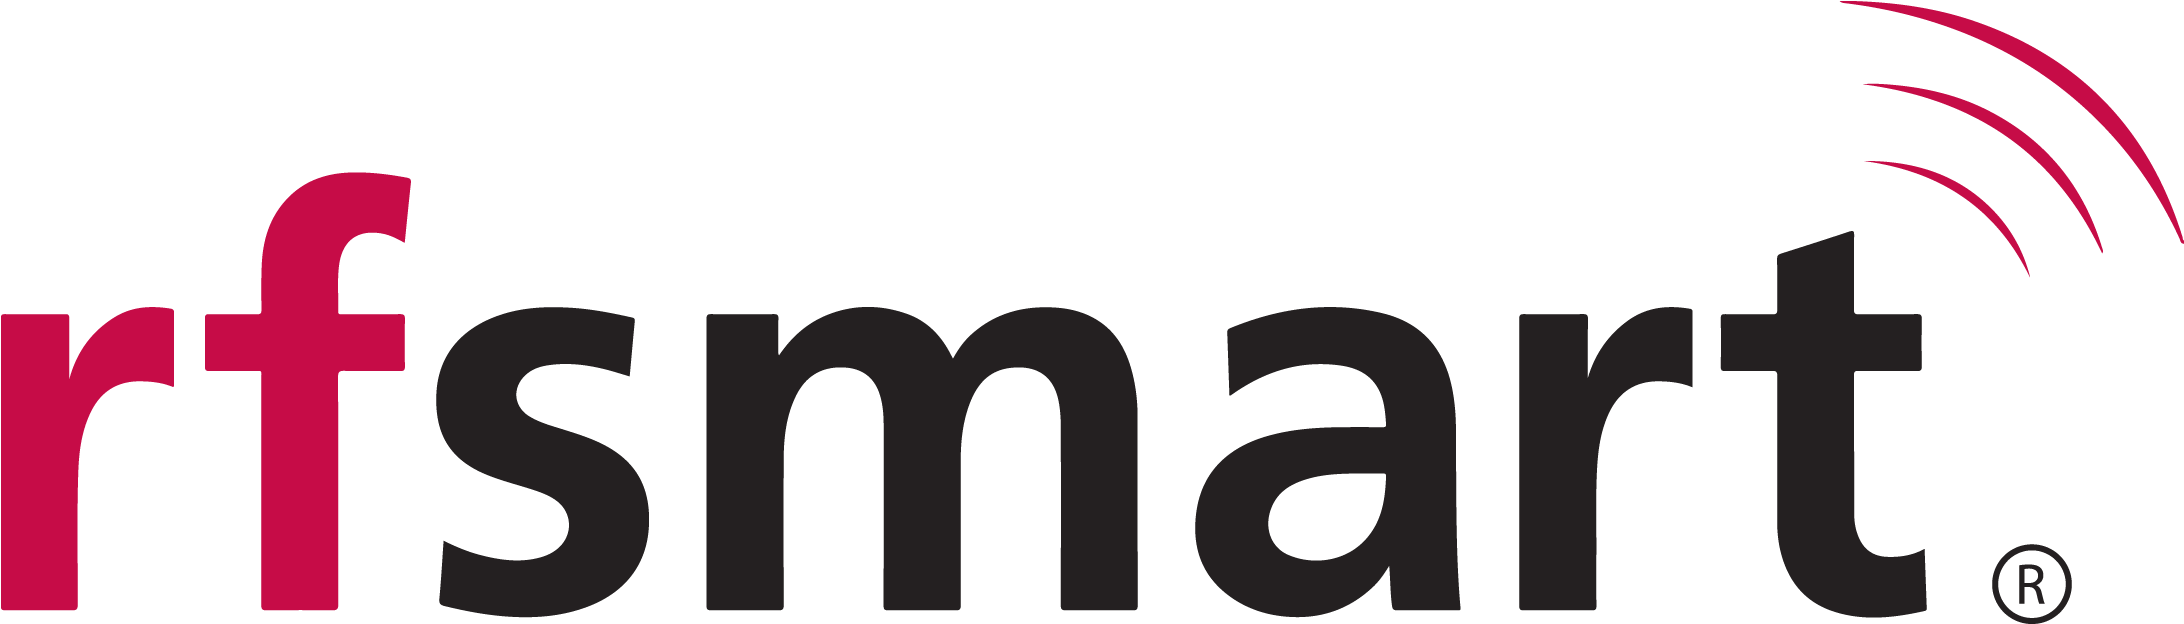 RF-SMART logo